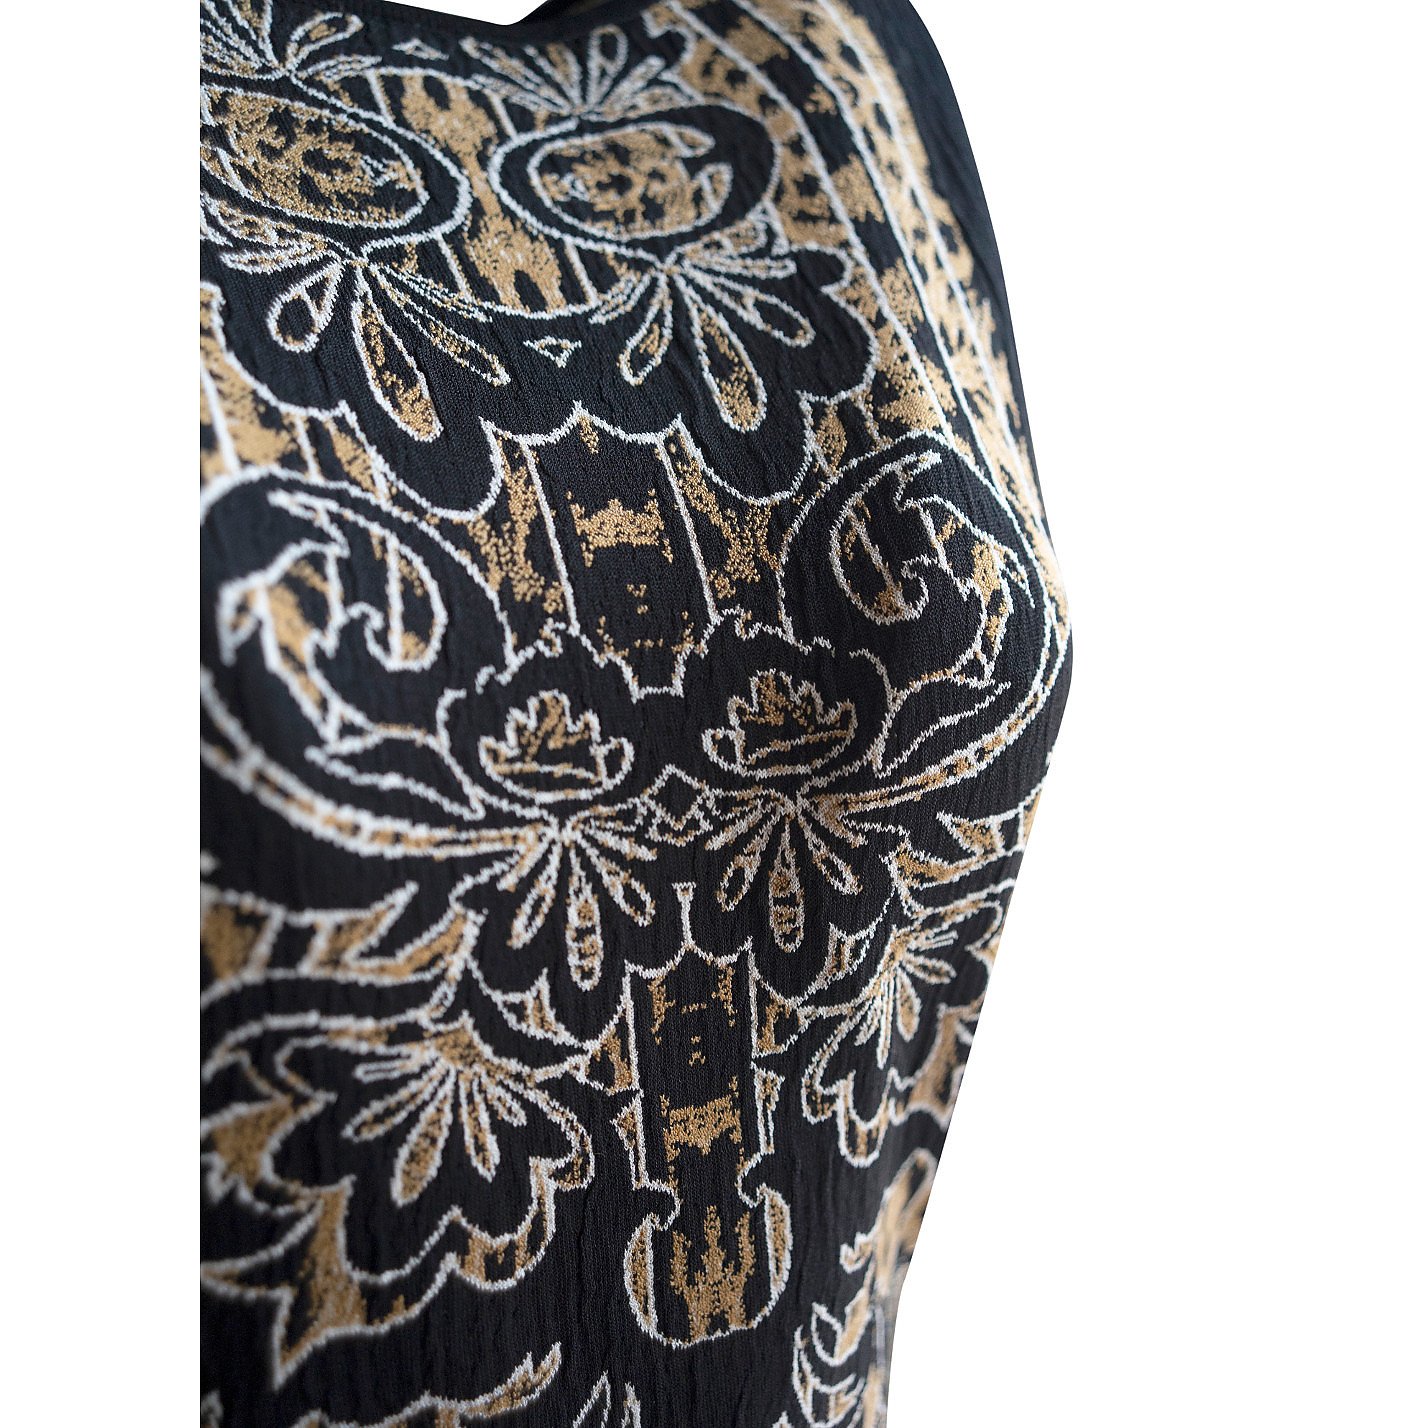 Roberto Cavalli Patterned Knit Dress